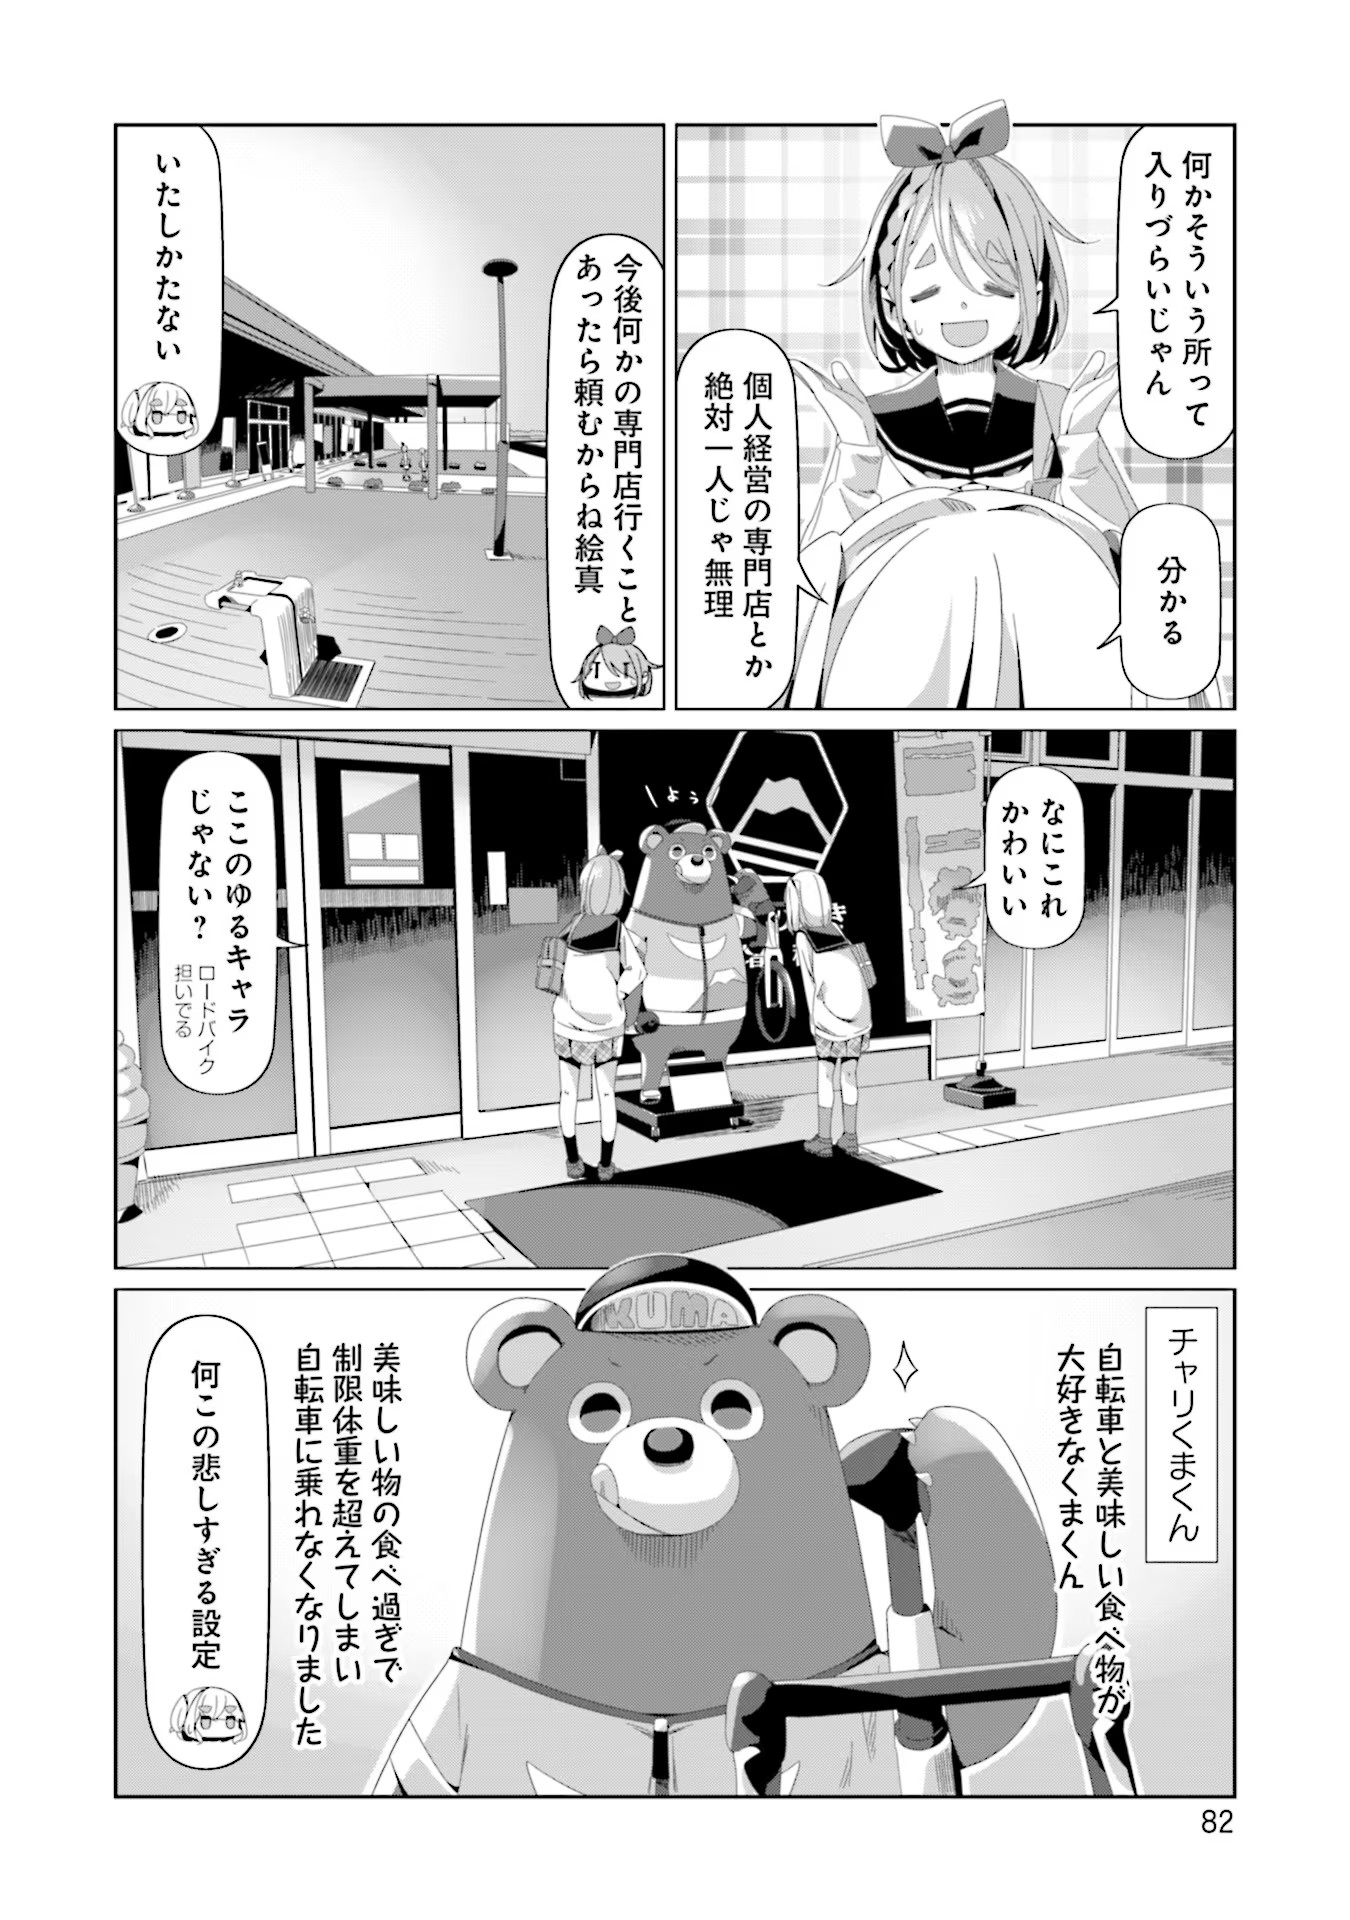 Yuru Camp - Chapter 79 - Page 2